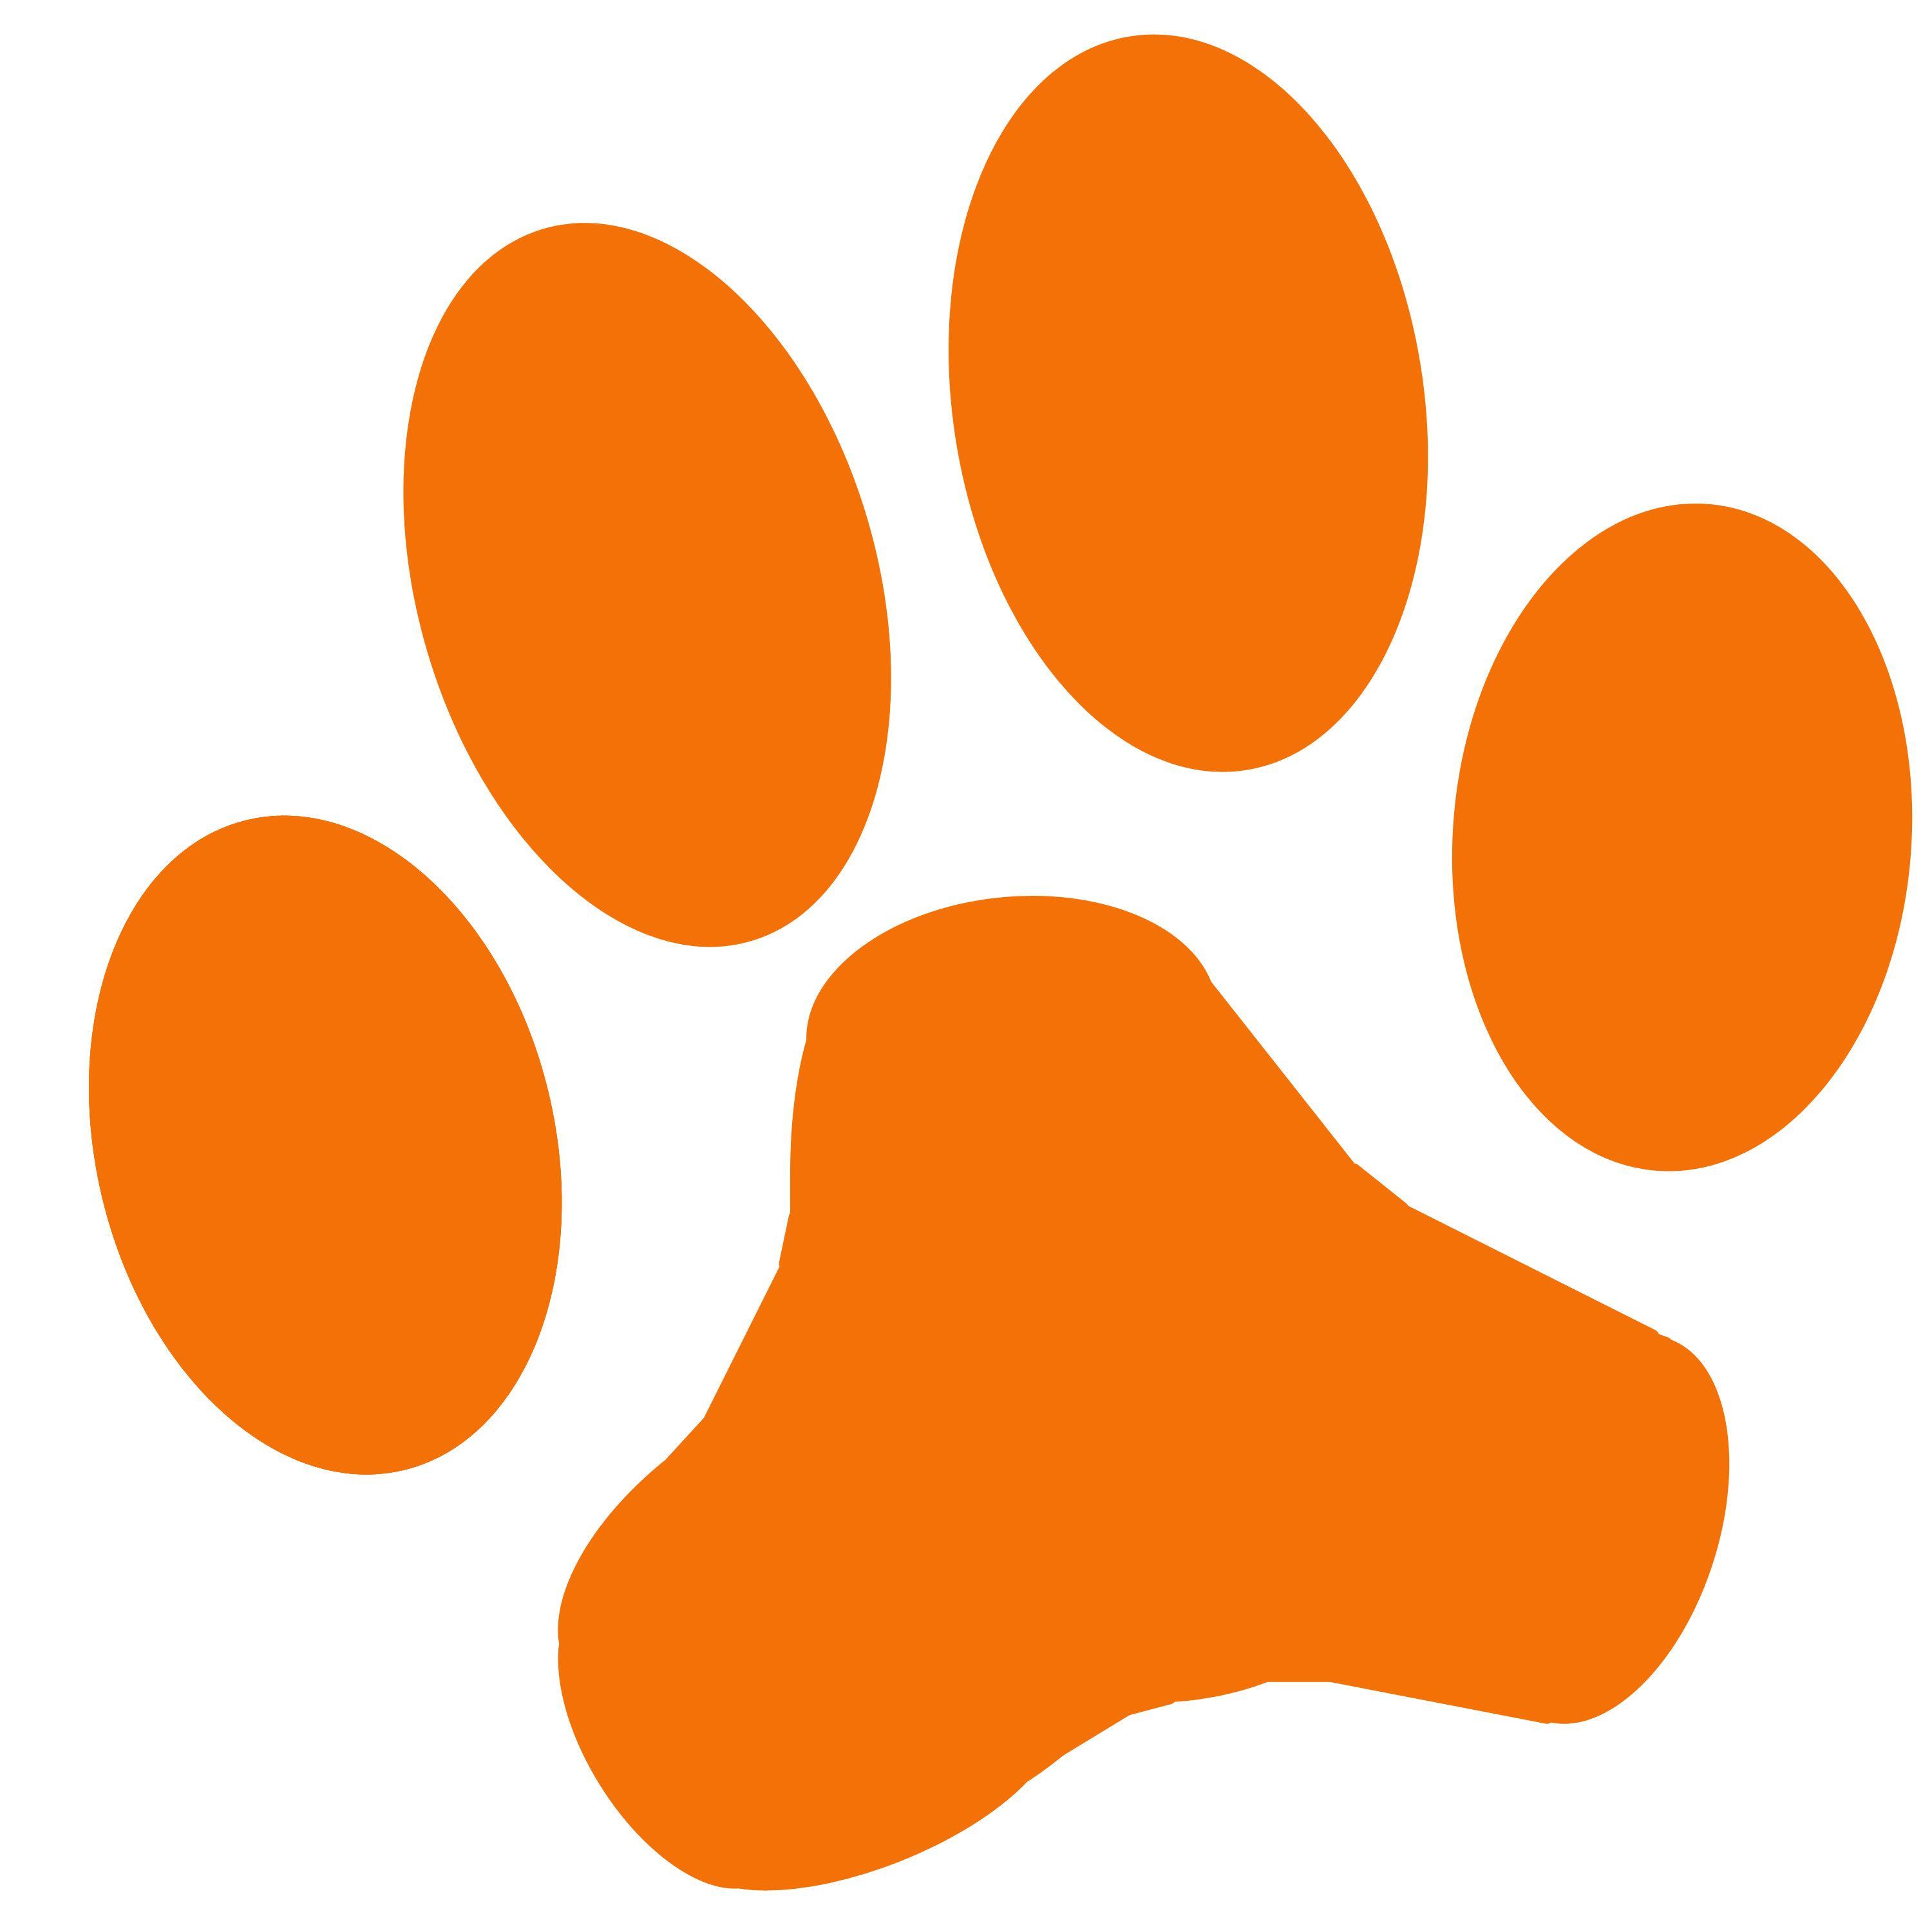 Orange O Paw Logo - Free Picture Of Paw Print, Download Free Clip Art, Free Clip Art on ...